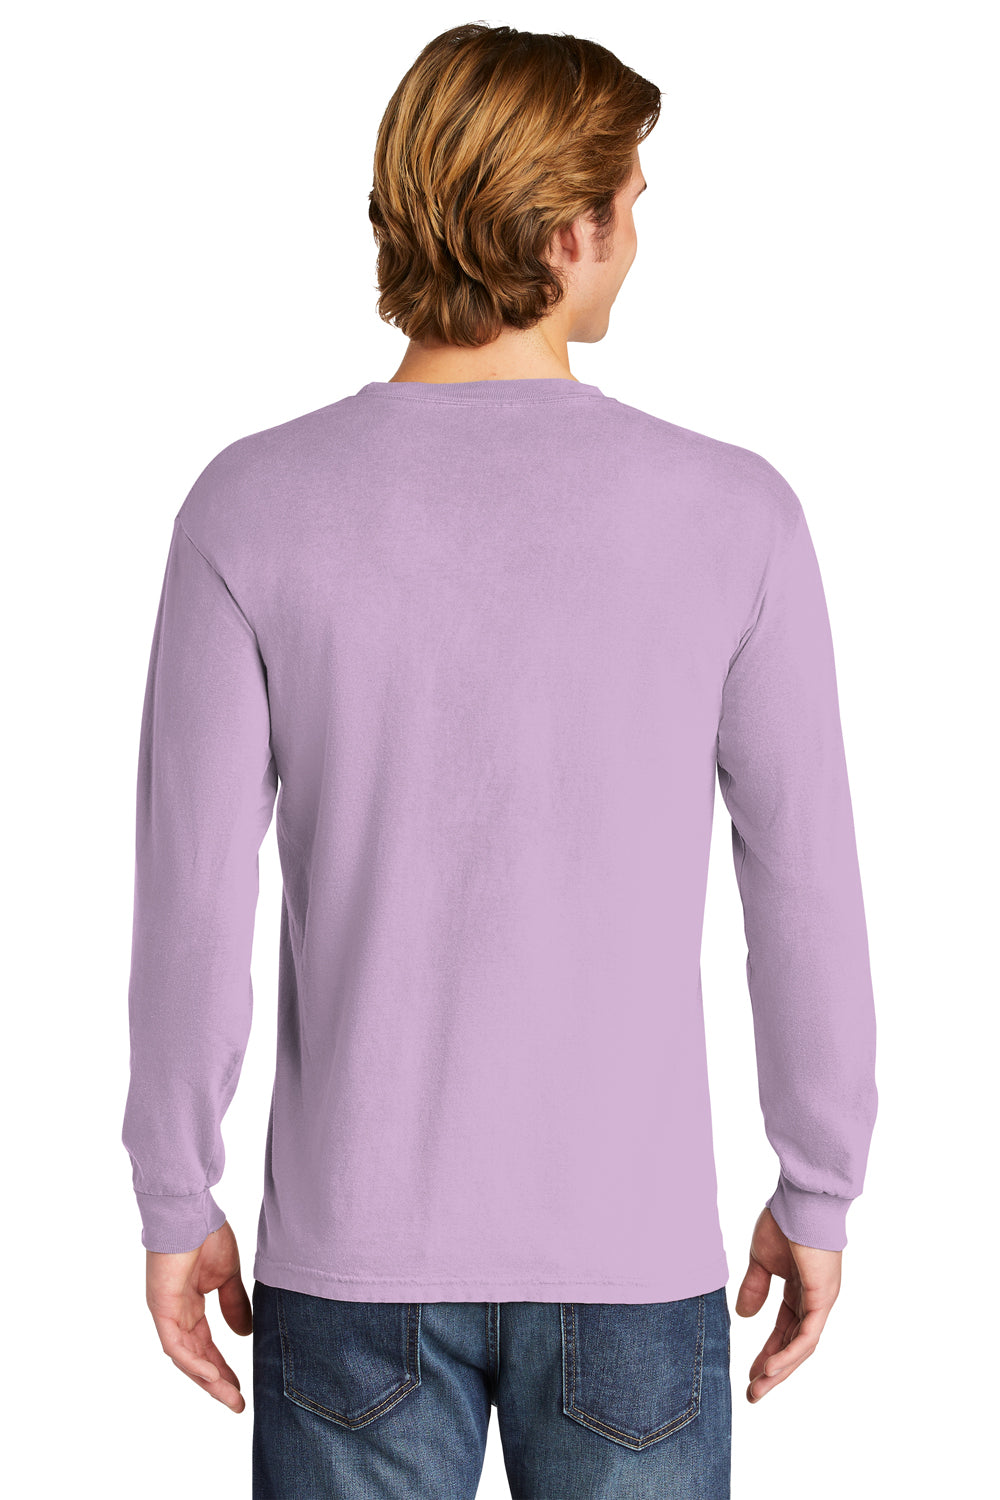 Comfort Colors 6014/C6014 Mens Long Sleeve Crewneck T-Shirt Orchid Purple Back